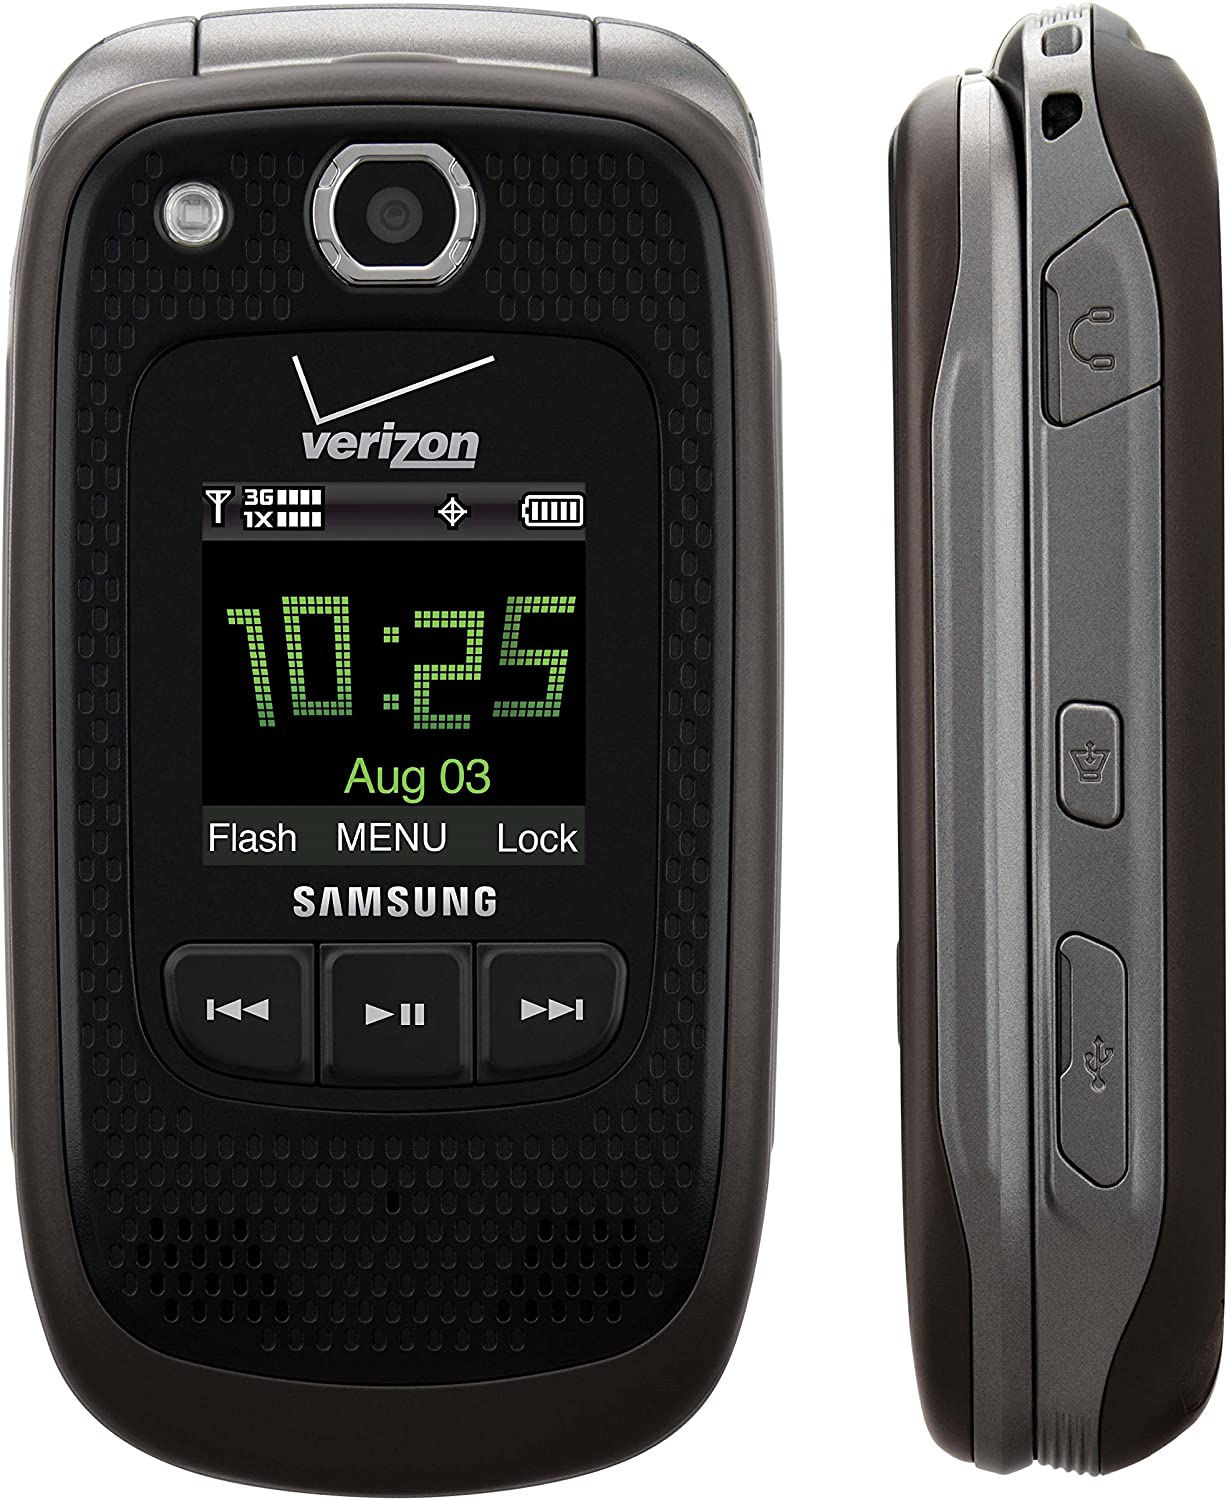 Verizon Flip Phones for Seniors With Simple Prepaid SIM and Features